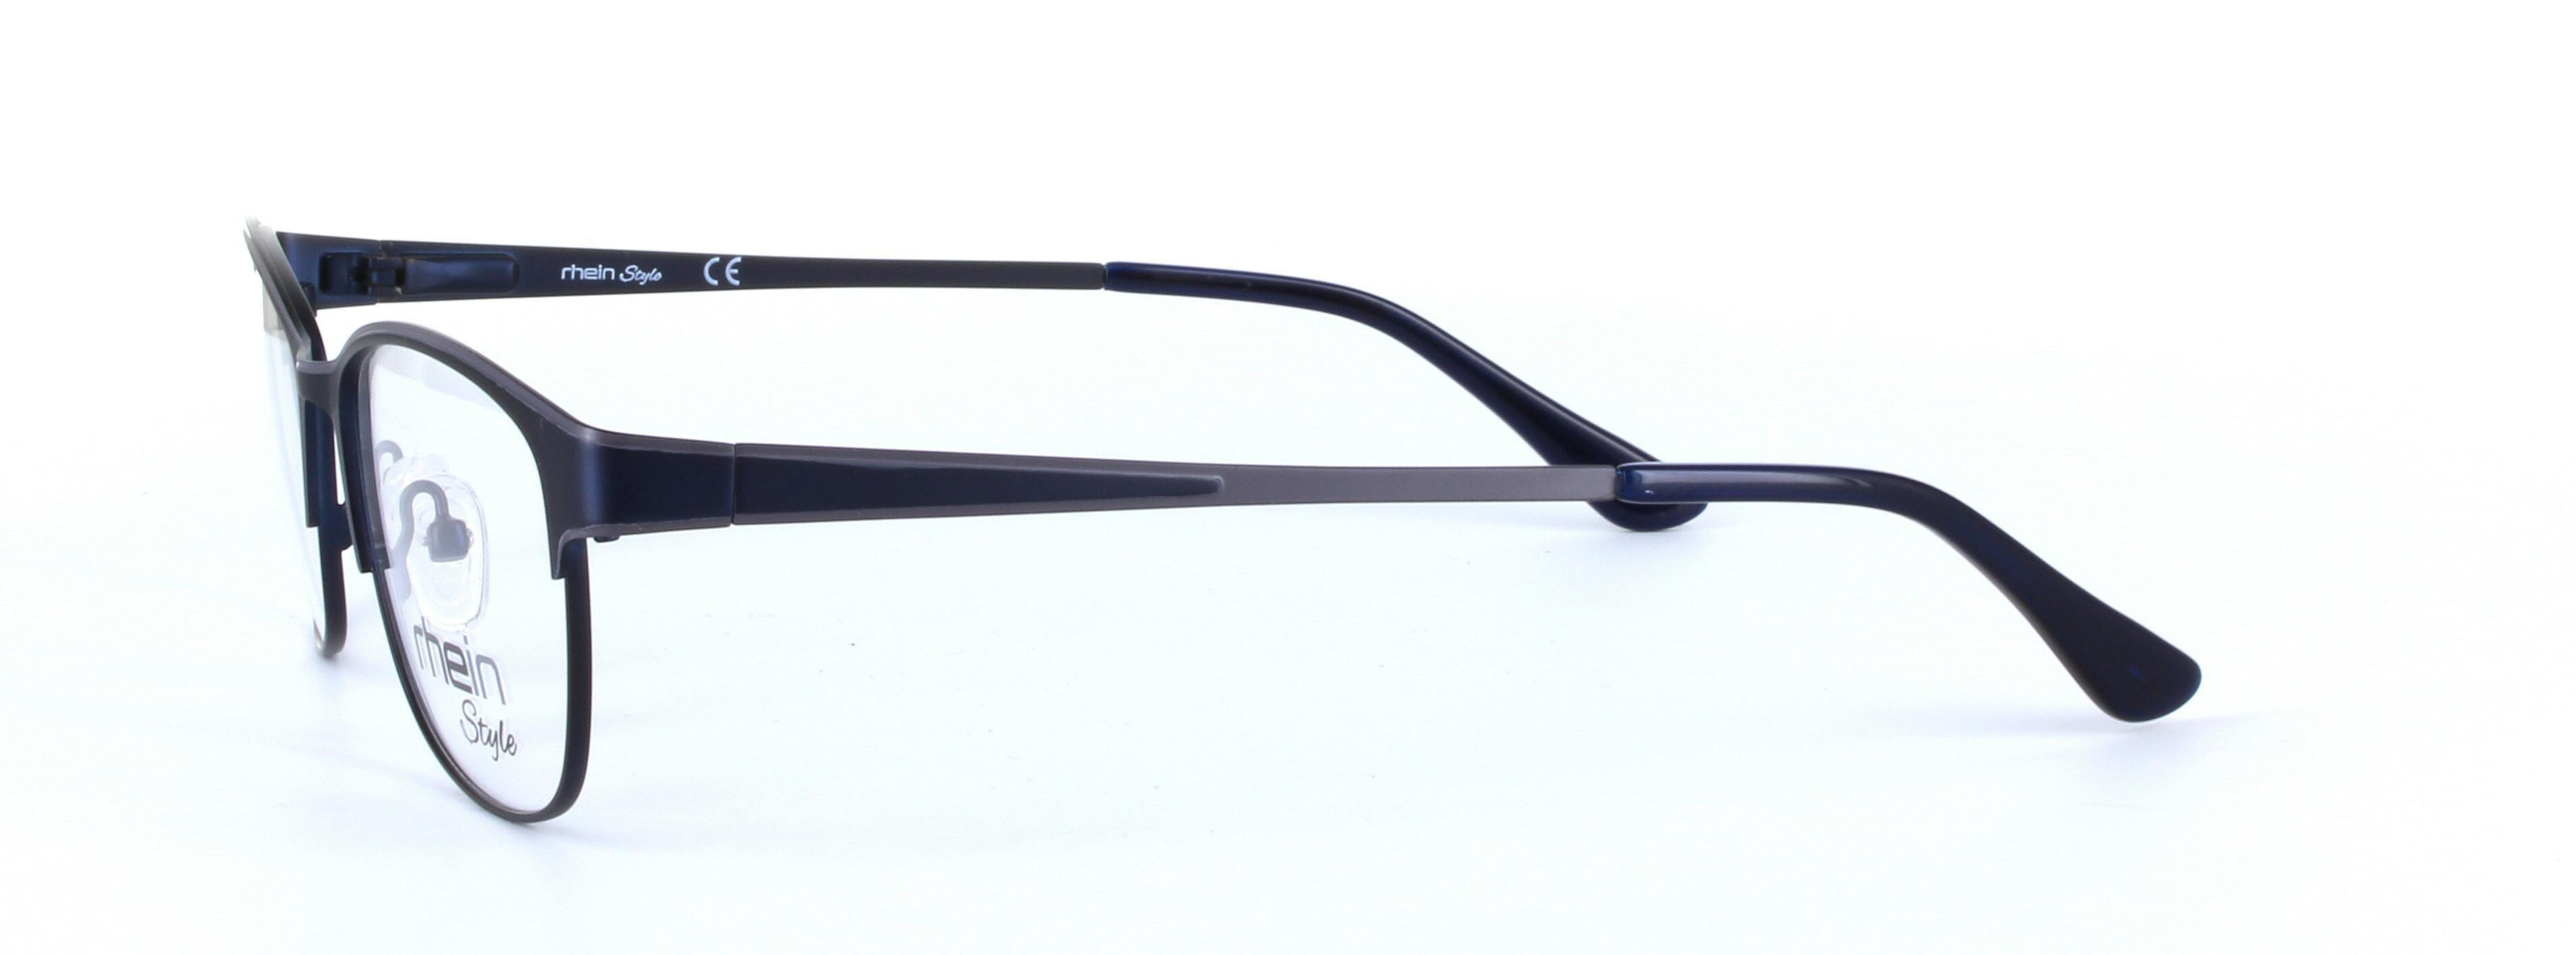 Harvey Blue Full Rim Oval Metal Glasses - Image View 2